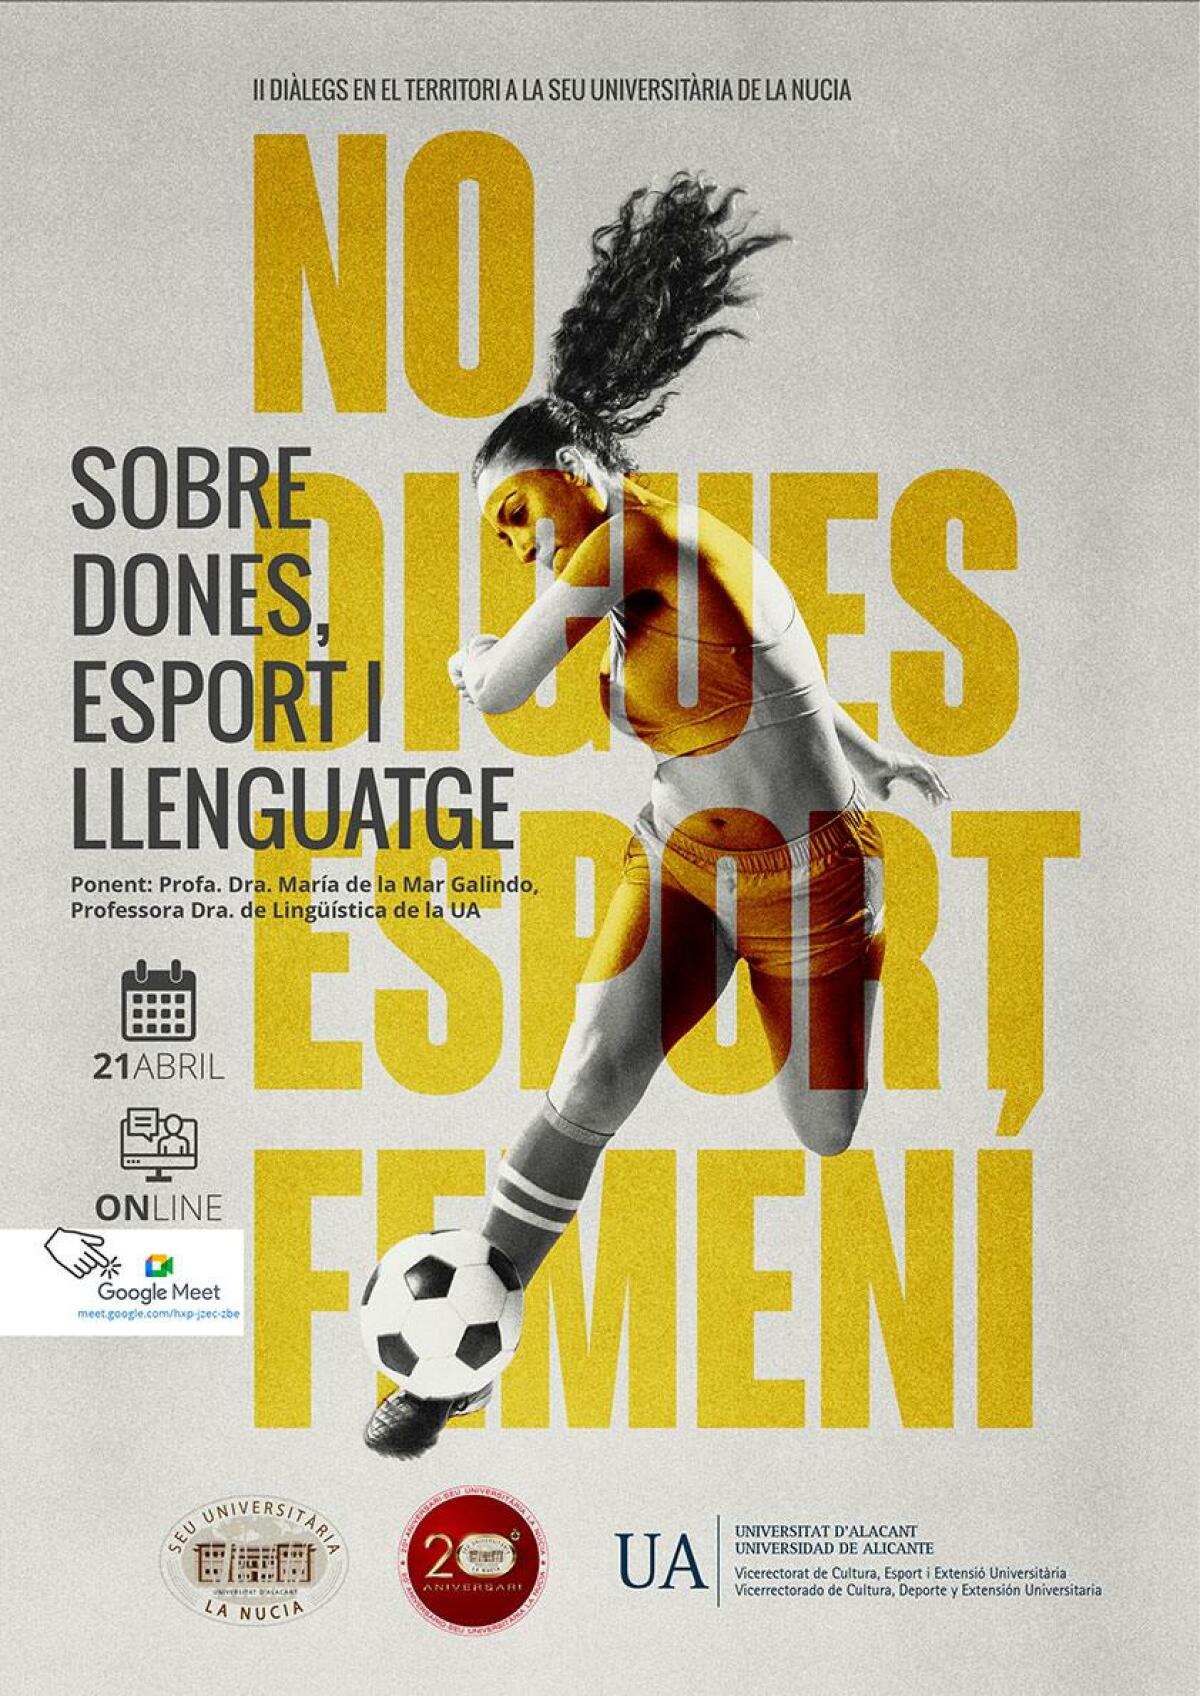 Esta tarde conferencia on-line “No digues esport femení” de la Seu